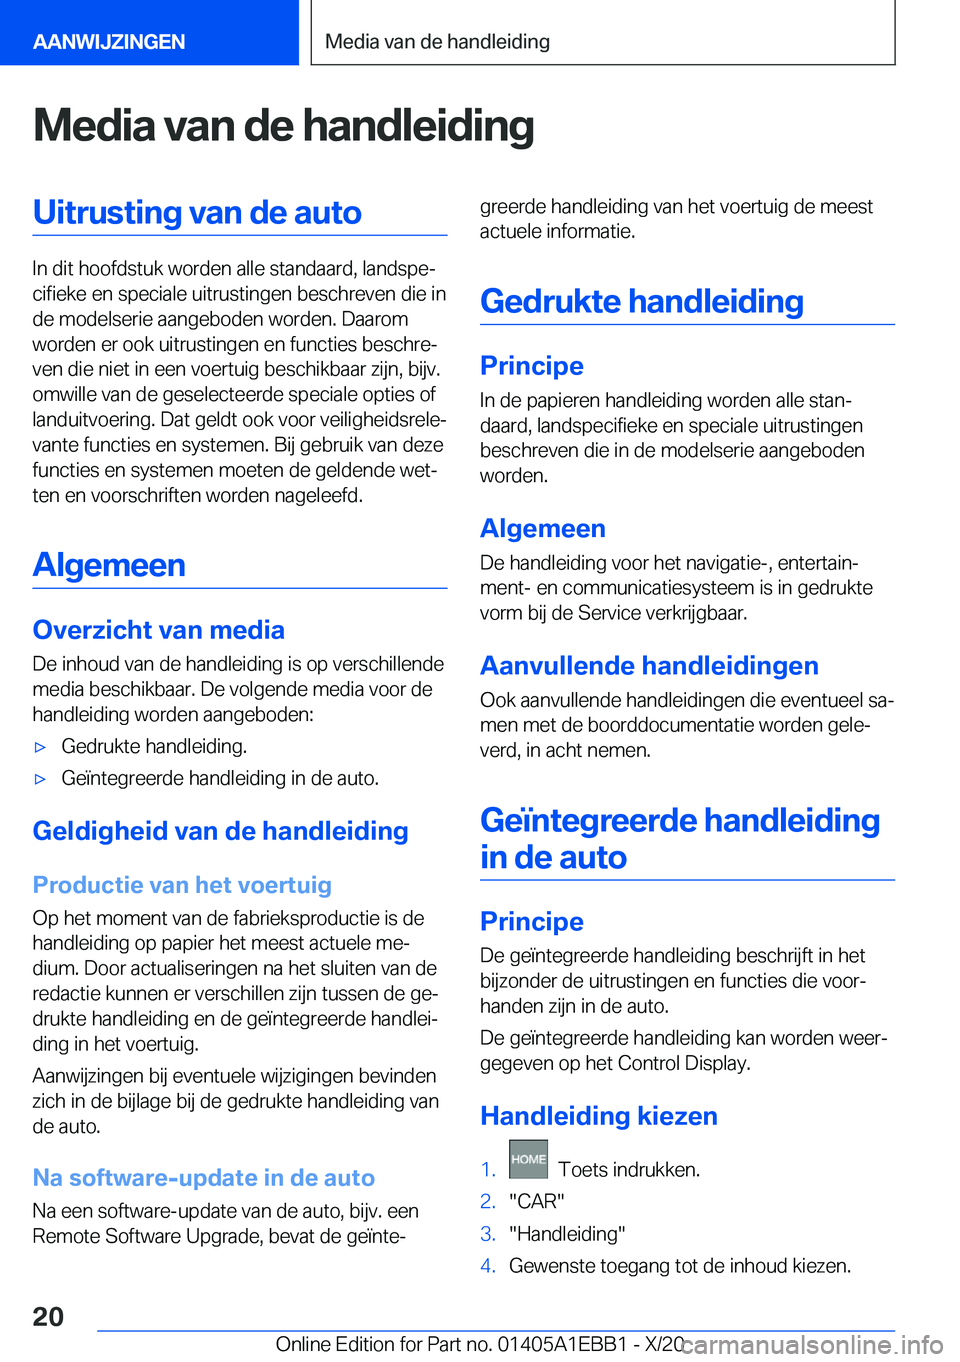 BMW 3 SERIES 2021  Instructieboekjes (in Dutch) �M�e�d�i�a��v�a�n��d�e��h�a�n�d�l�e�i�d�i�n�g�U�i�t�r�u�s�t�i�n�g��v�a�n��d�e��a�u�t�o
�I�n��d�i�t��h�o�o�f�d�s�t�u�k��w�o�r�d�e�n��a�l�l�e��s�t�a�n�d�a�a�r�d�,��l�a�n�d�s�p�ej�c�i�f�i�e�